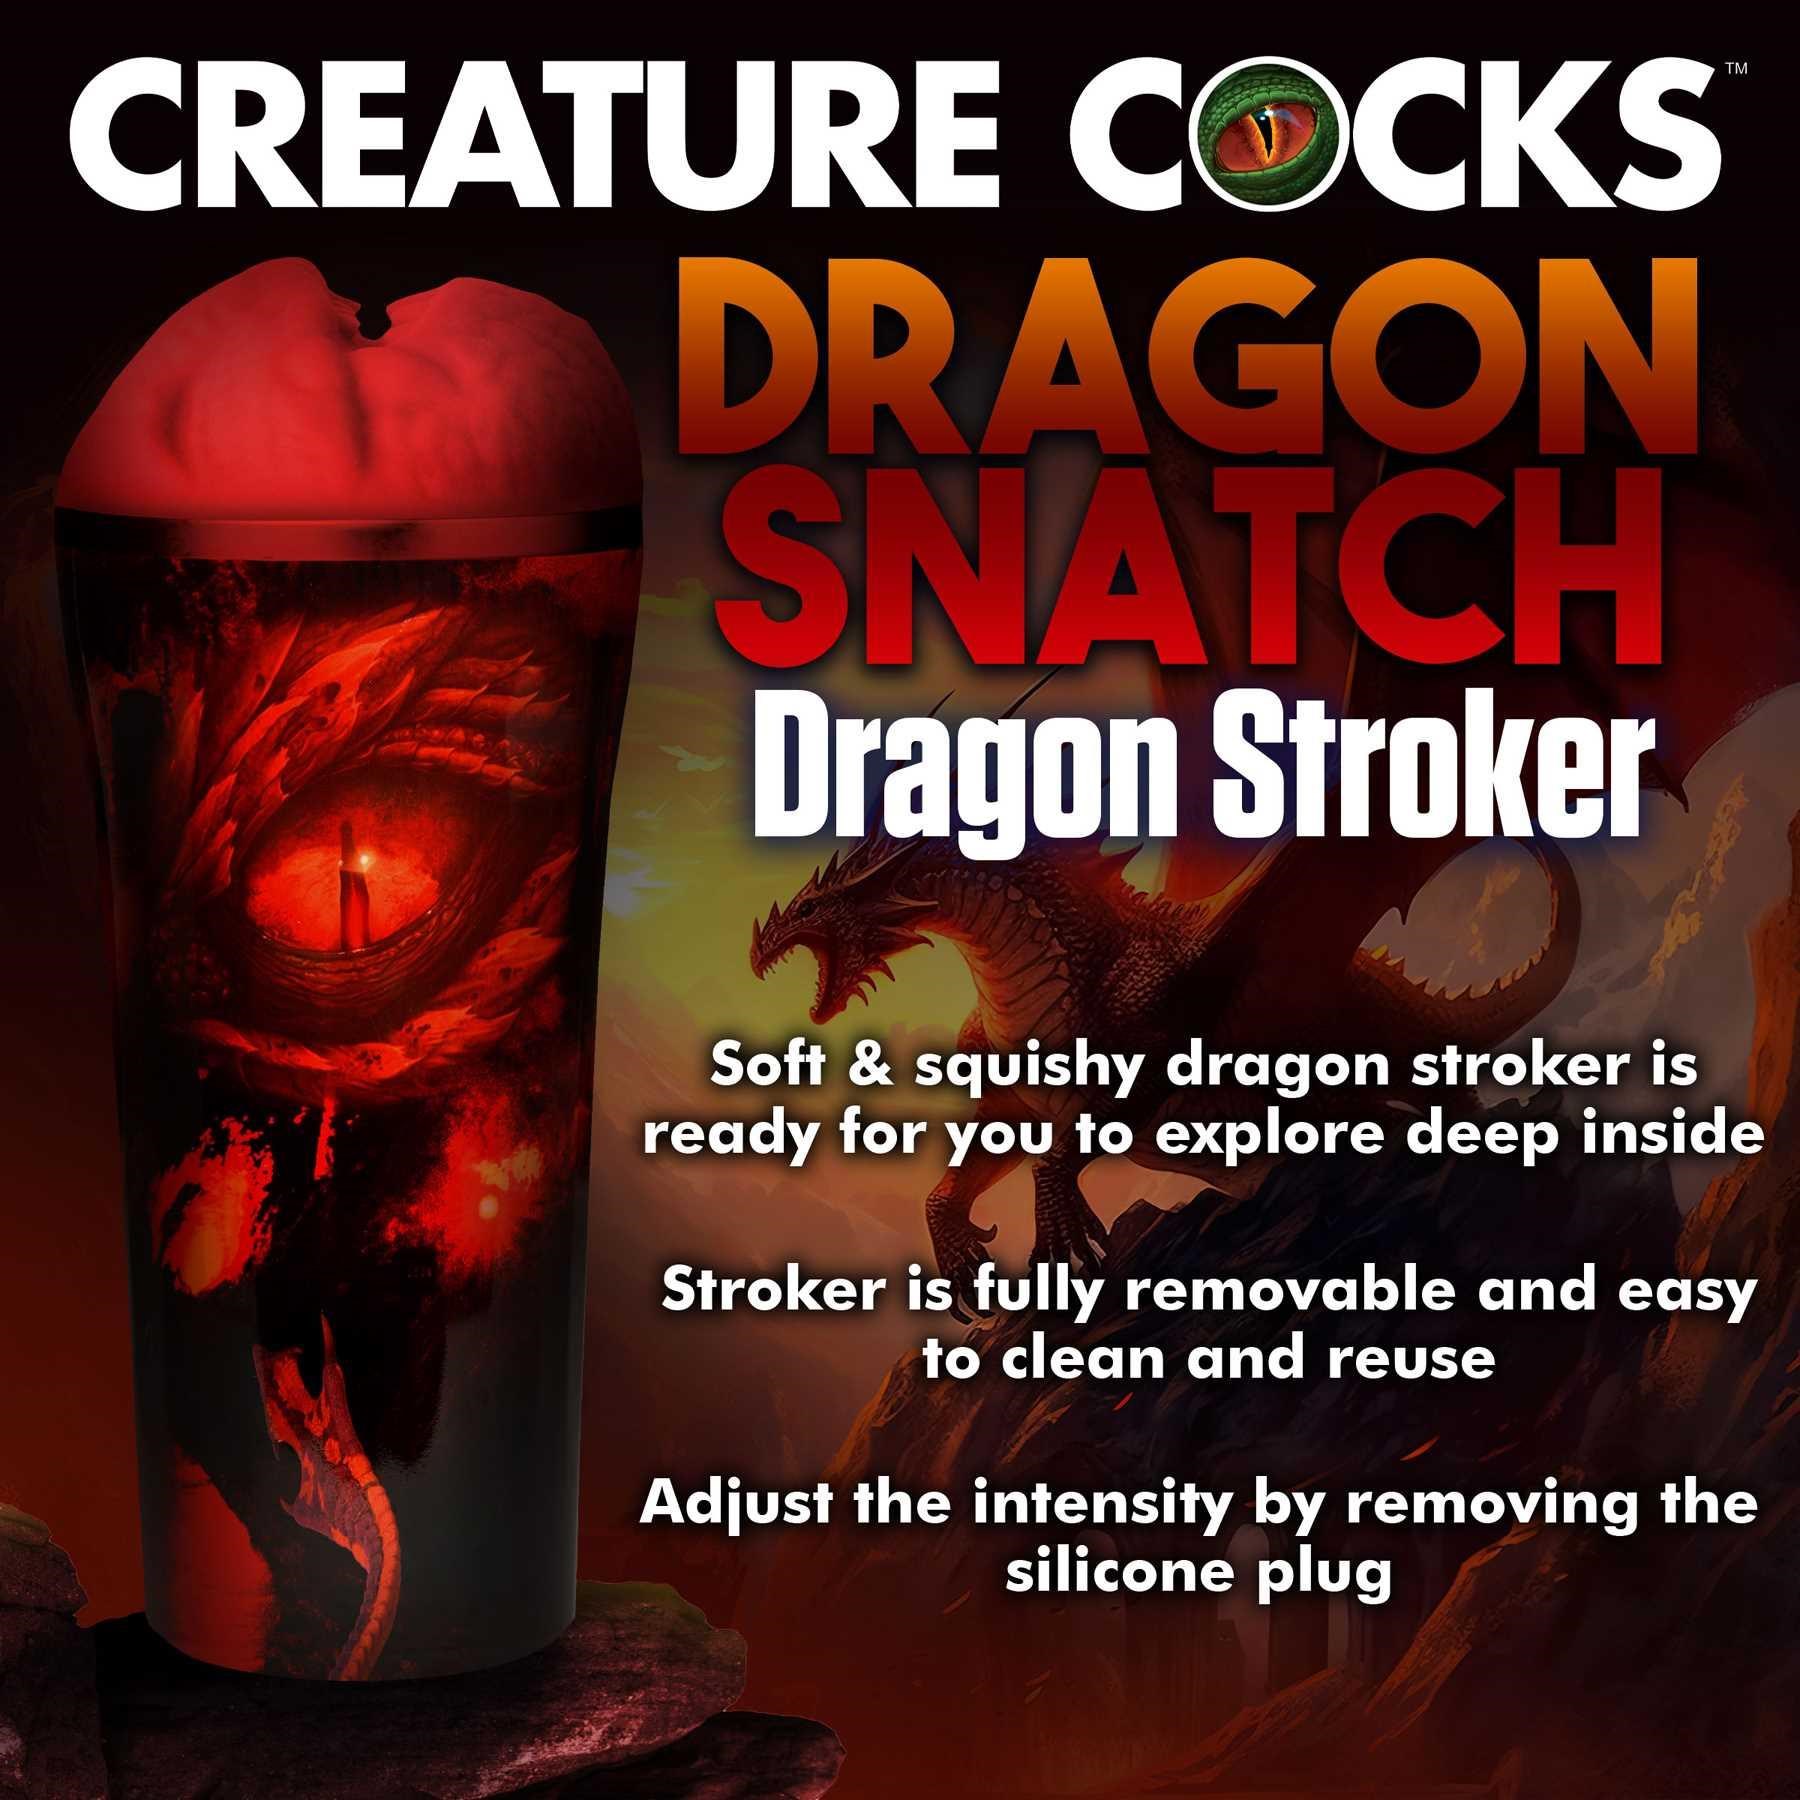 Creature Cocks Dragon Snatch Dragon Stroker mood image #2